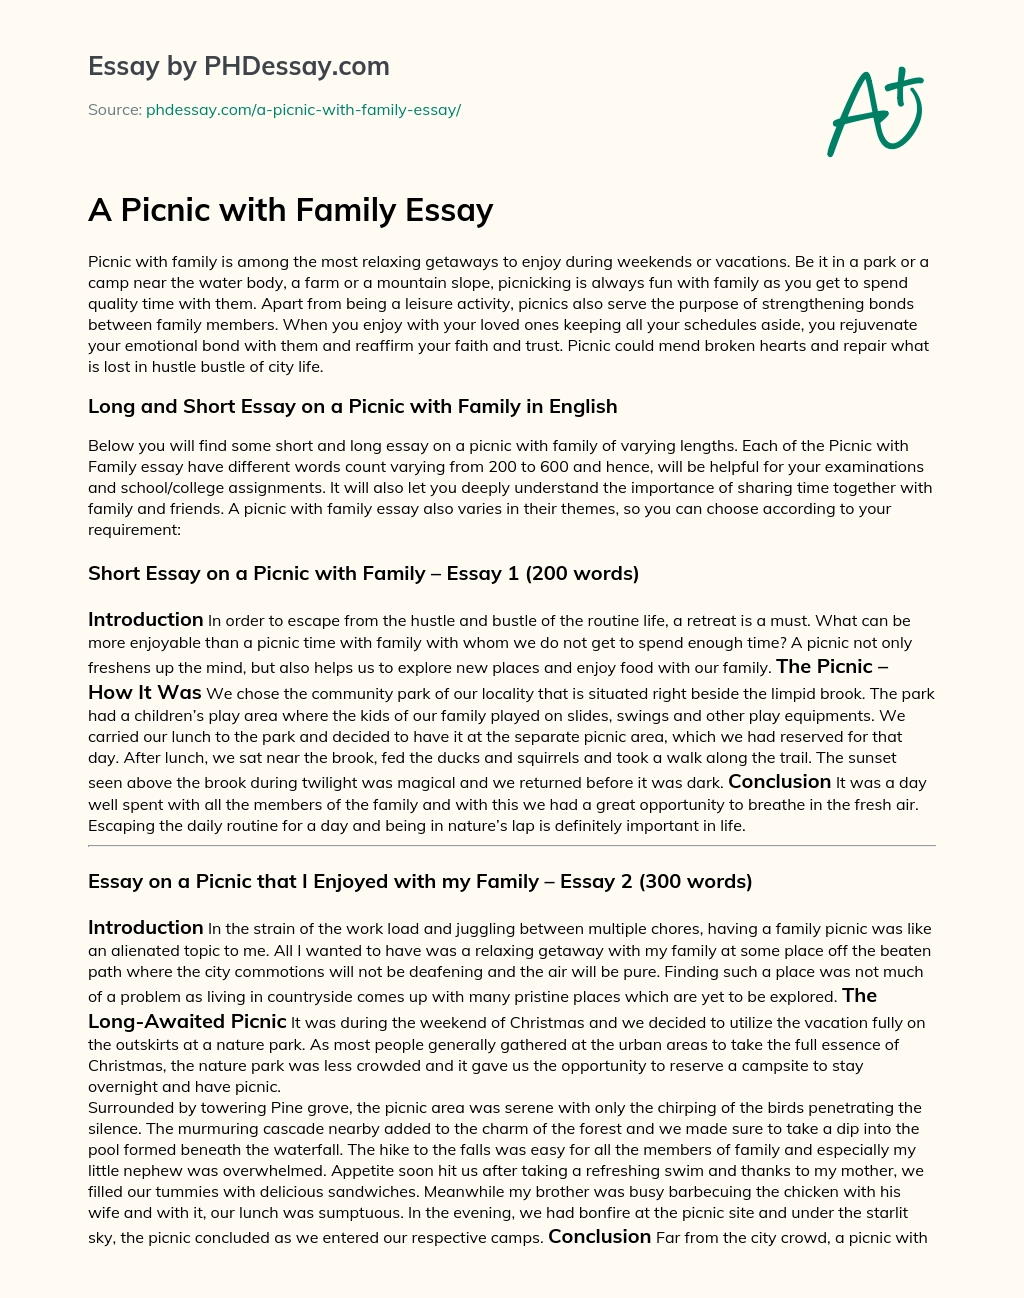 A Picnic with Family Essay essay